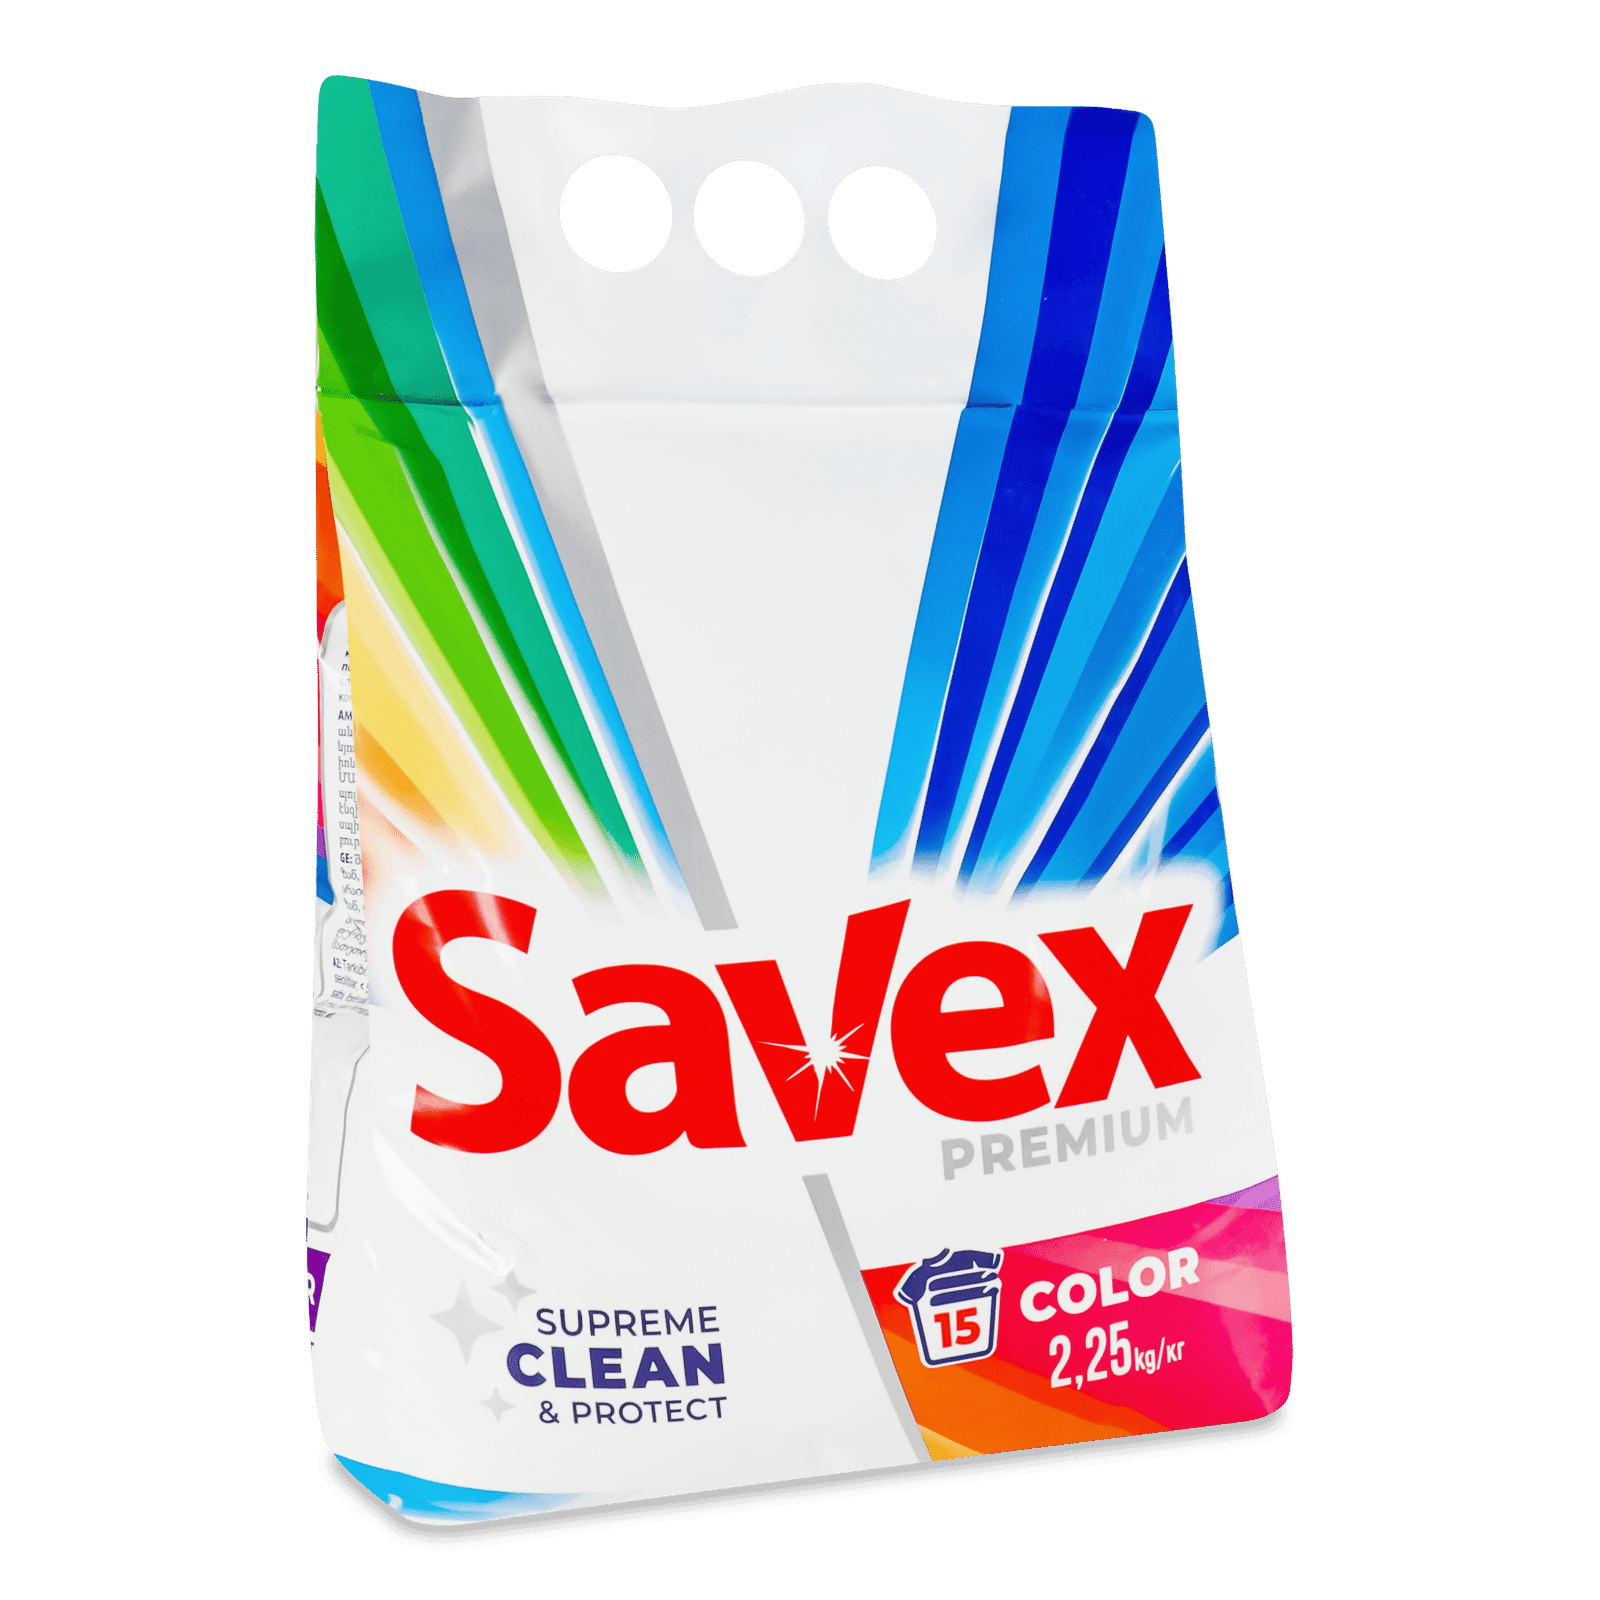 Порошок для прання Savex Premium Color&Care автомат - 1